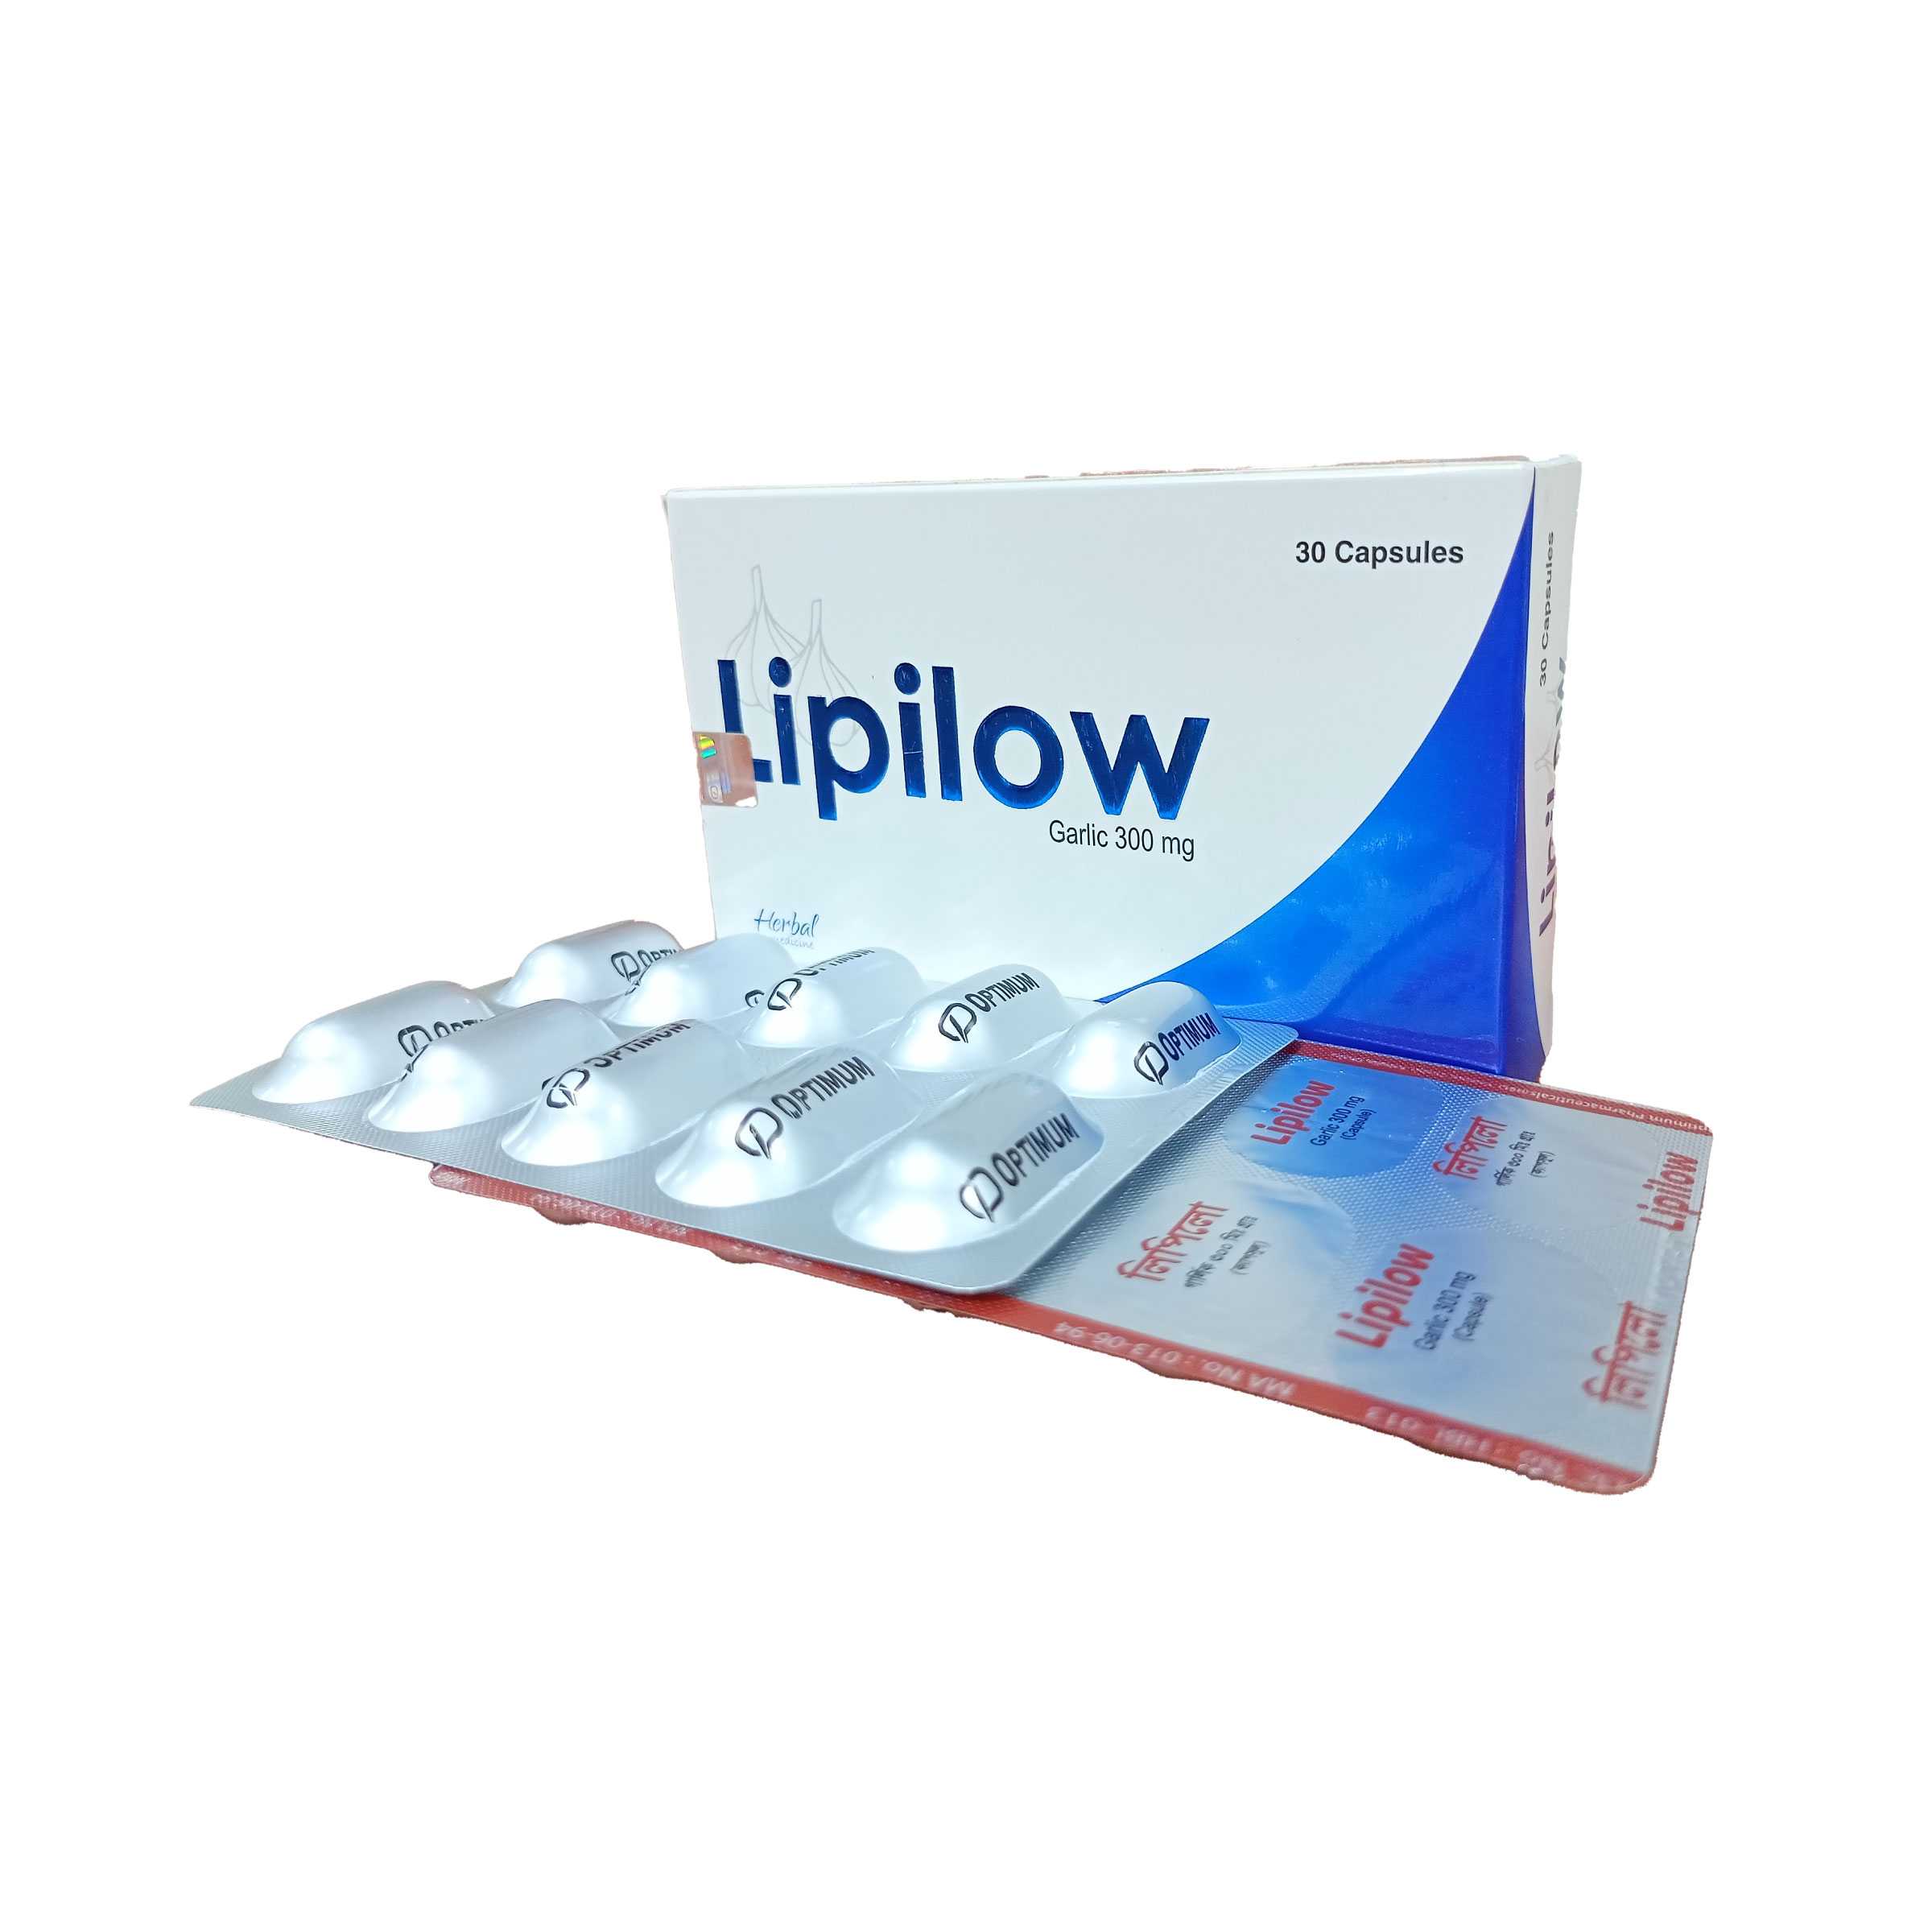 Lipilow